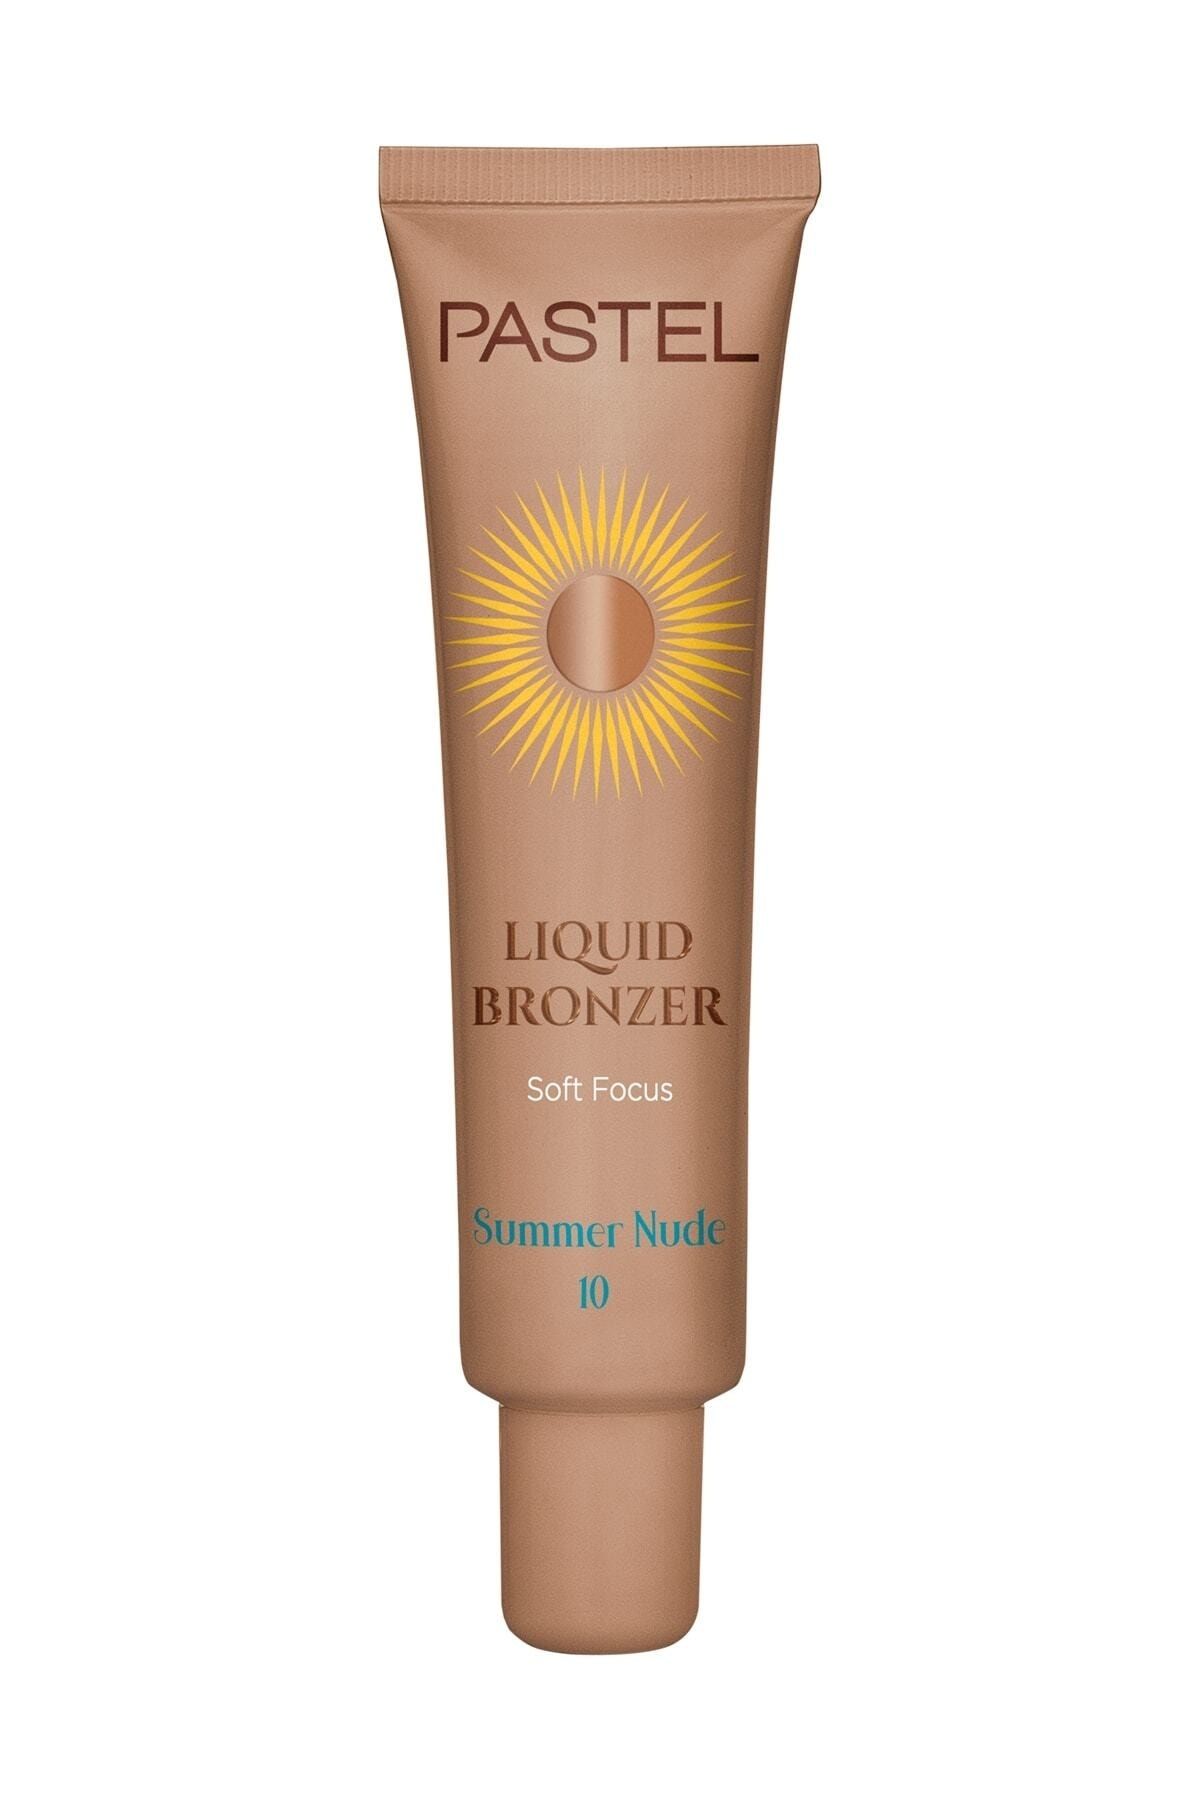 Pastel Liquid Bronzer Summer Nude No:10